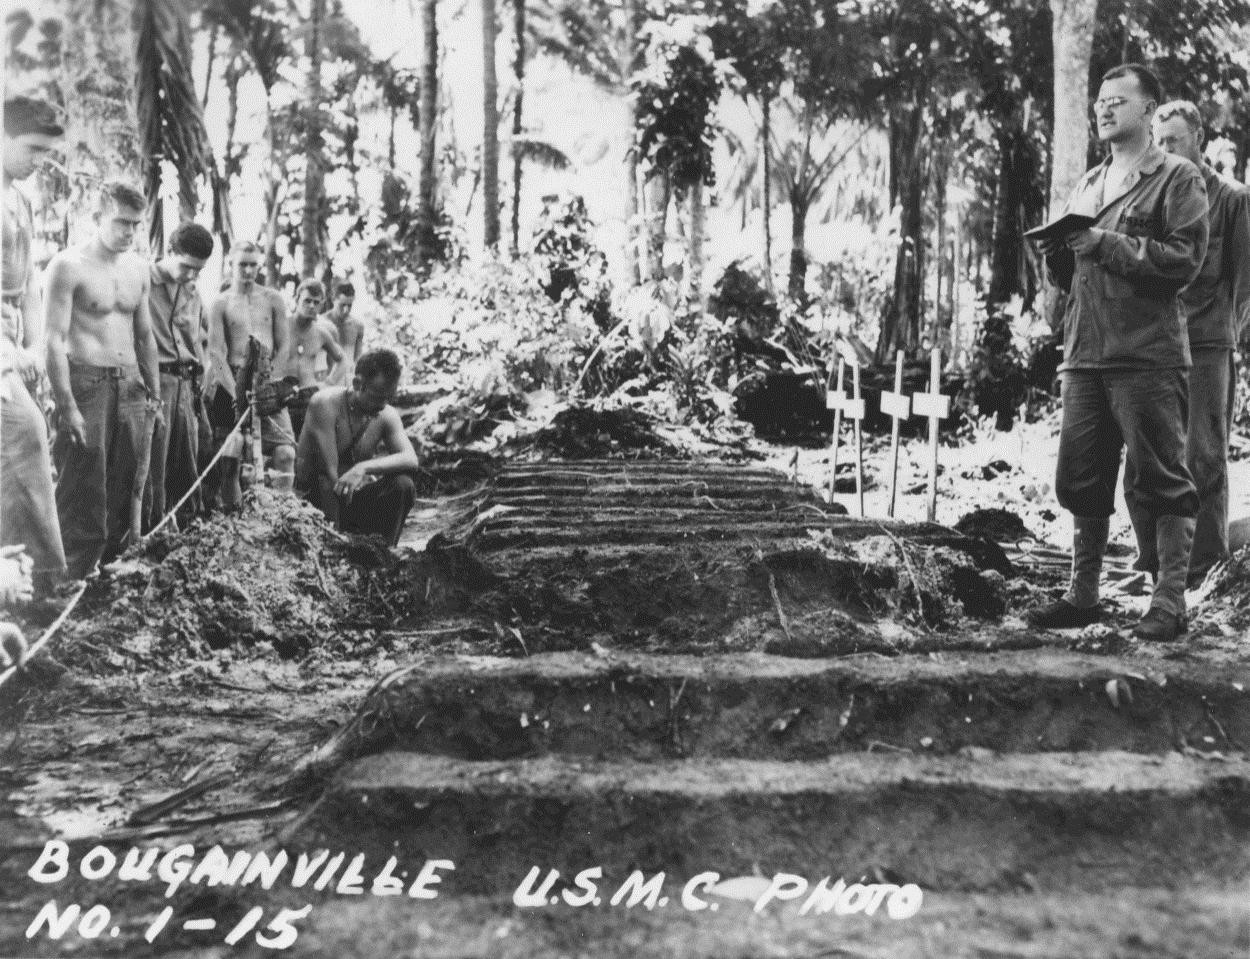 Funeral service for fallen US Marines, Bougainville, Solomon Islands, 1943-1944